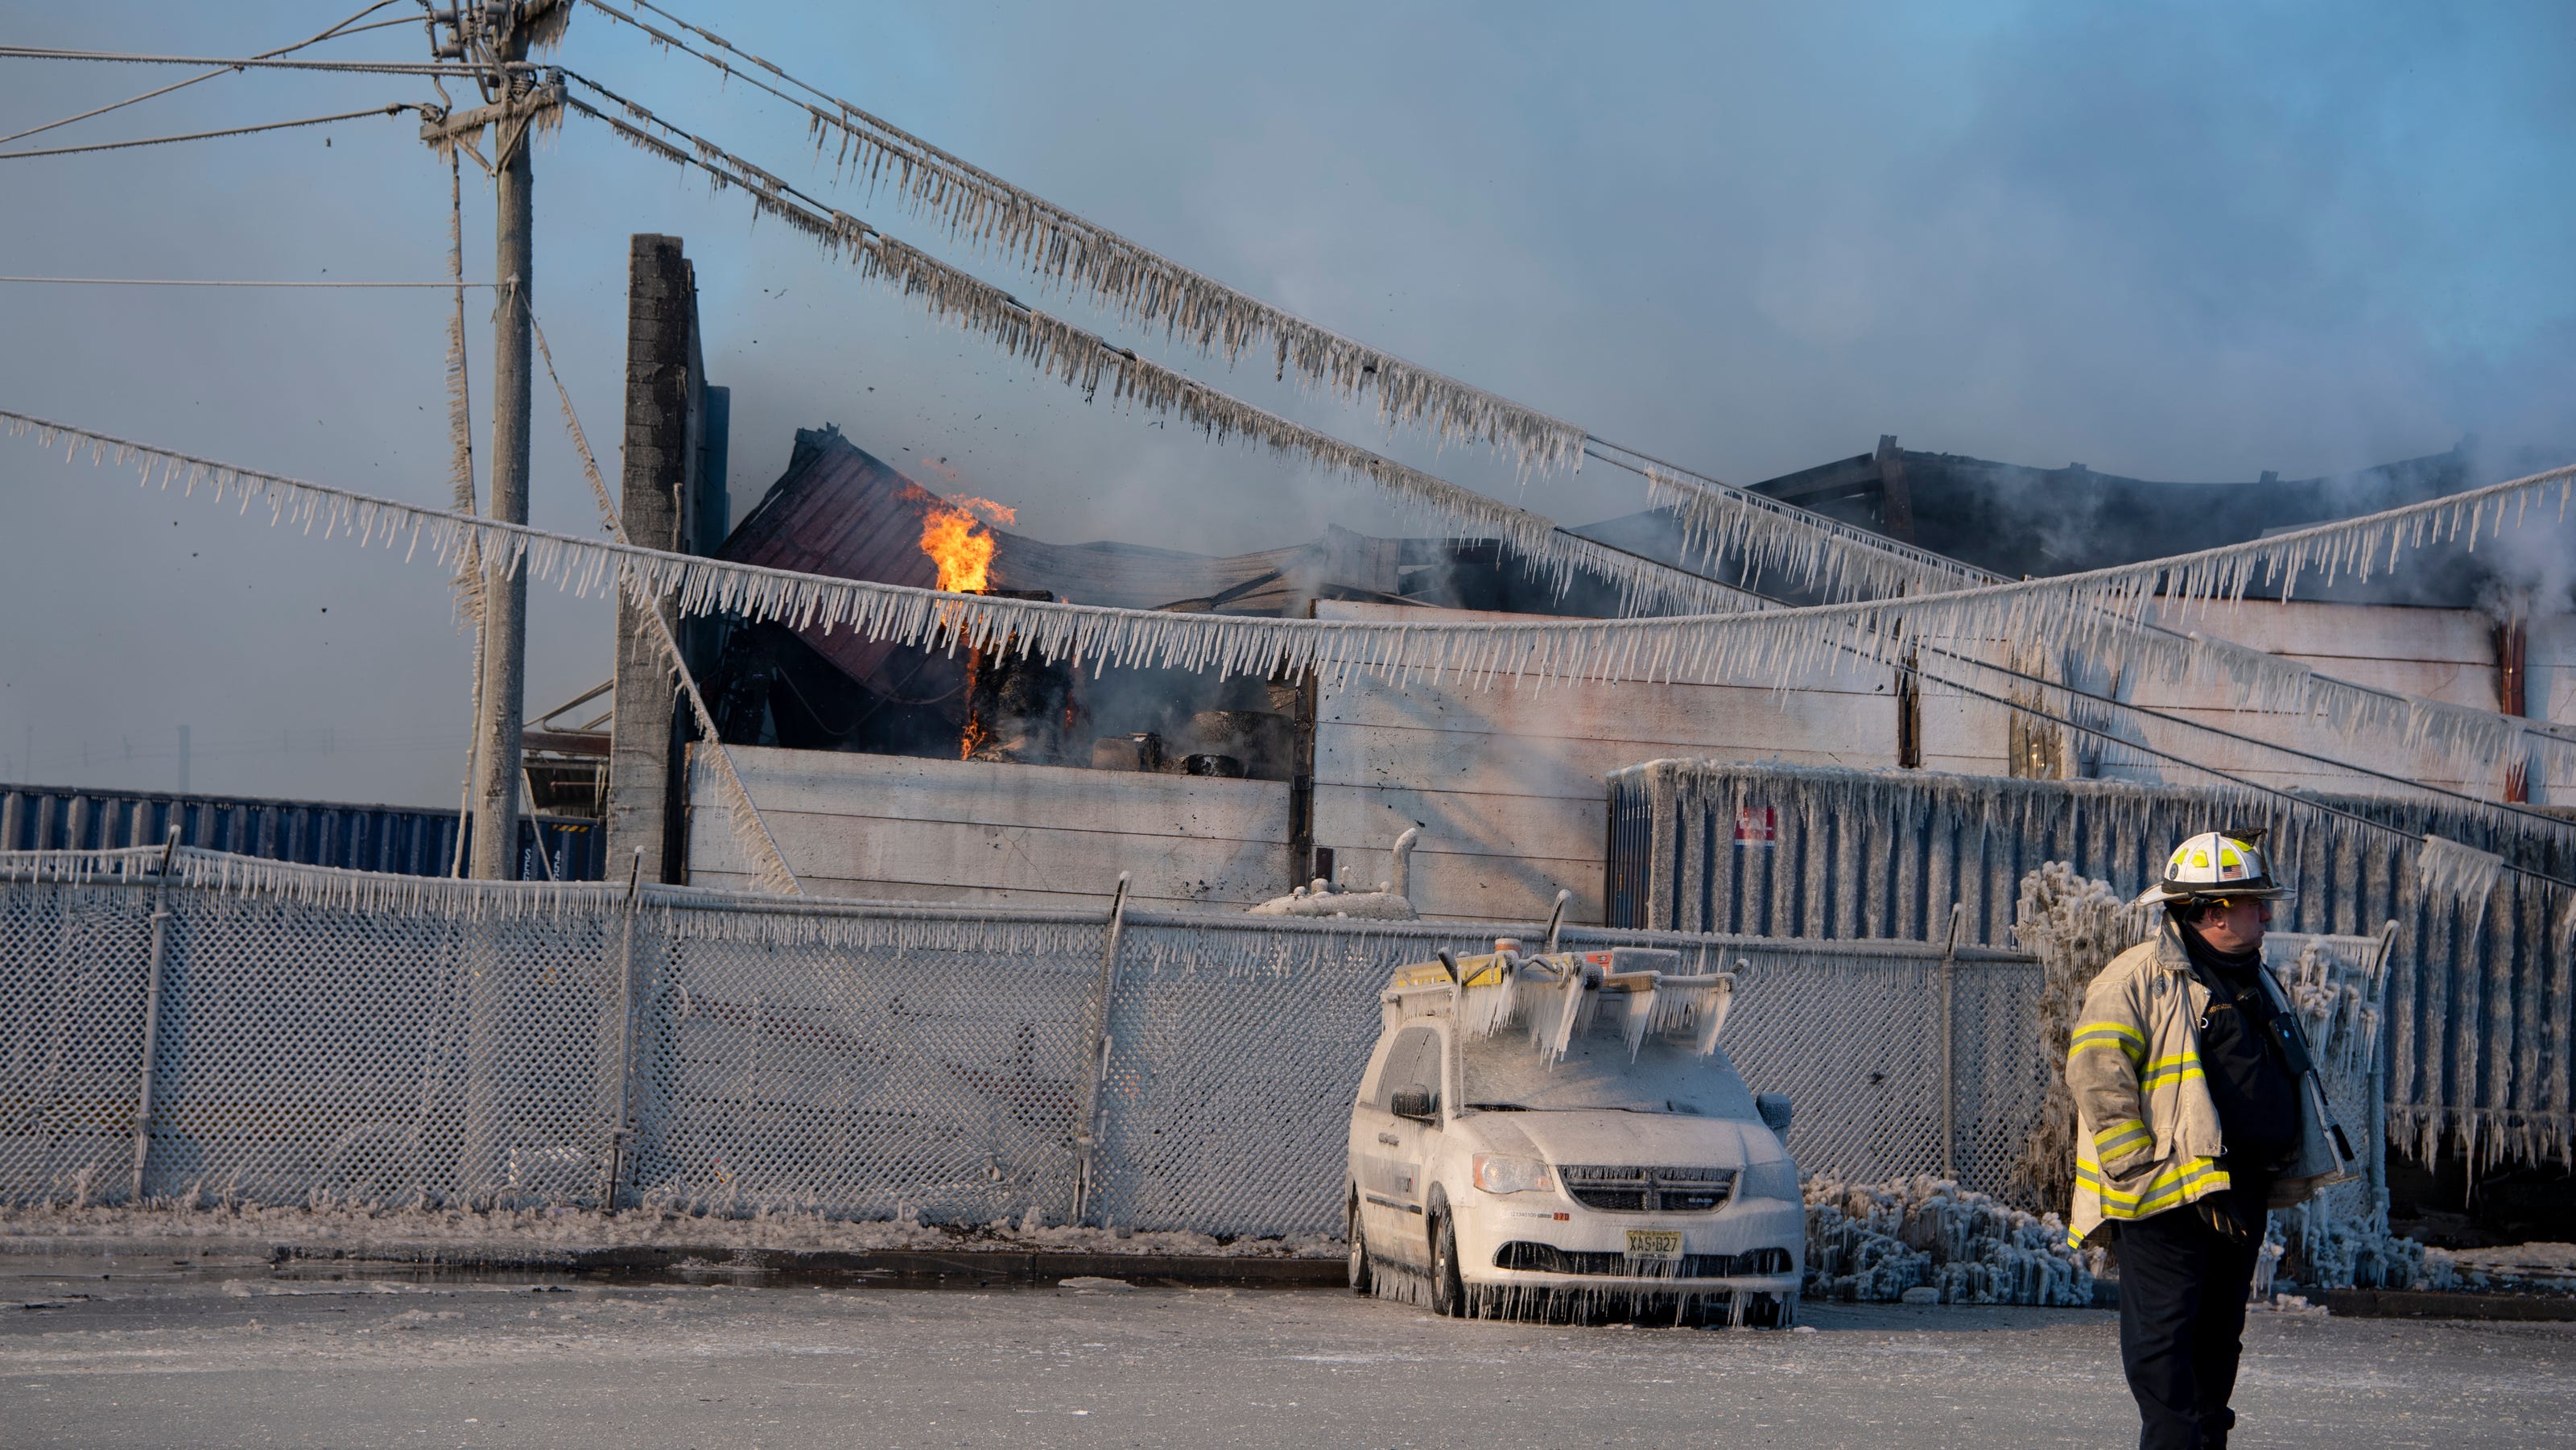 Passaic NJ fire Atlantic Coast Fibers employees 'anxious' after blaze